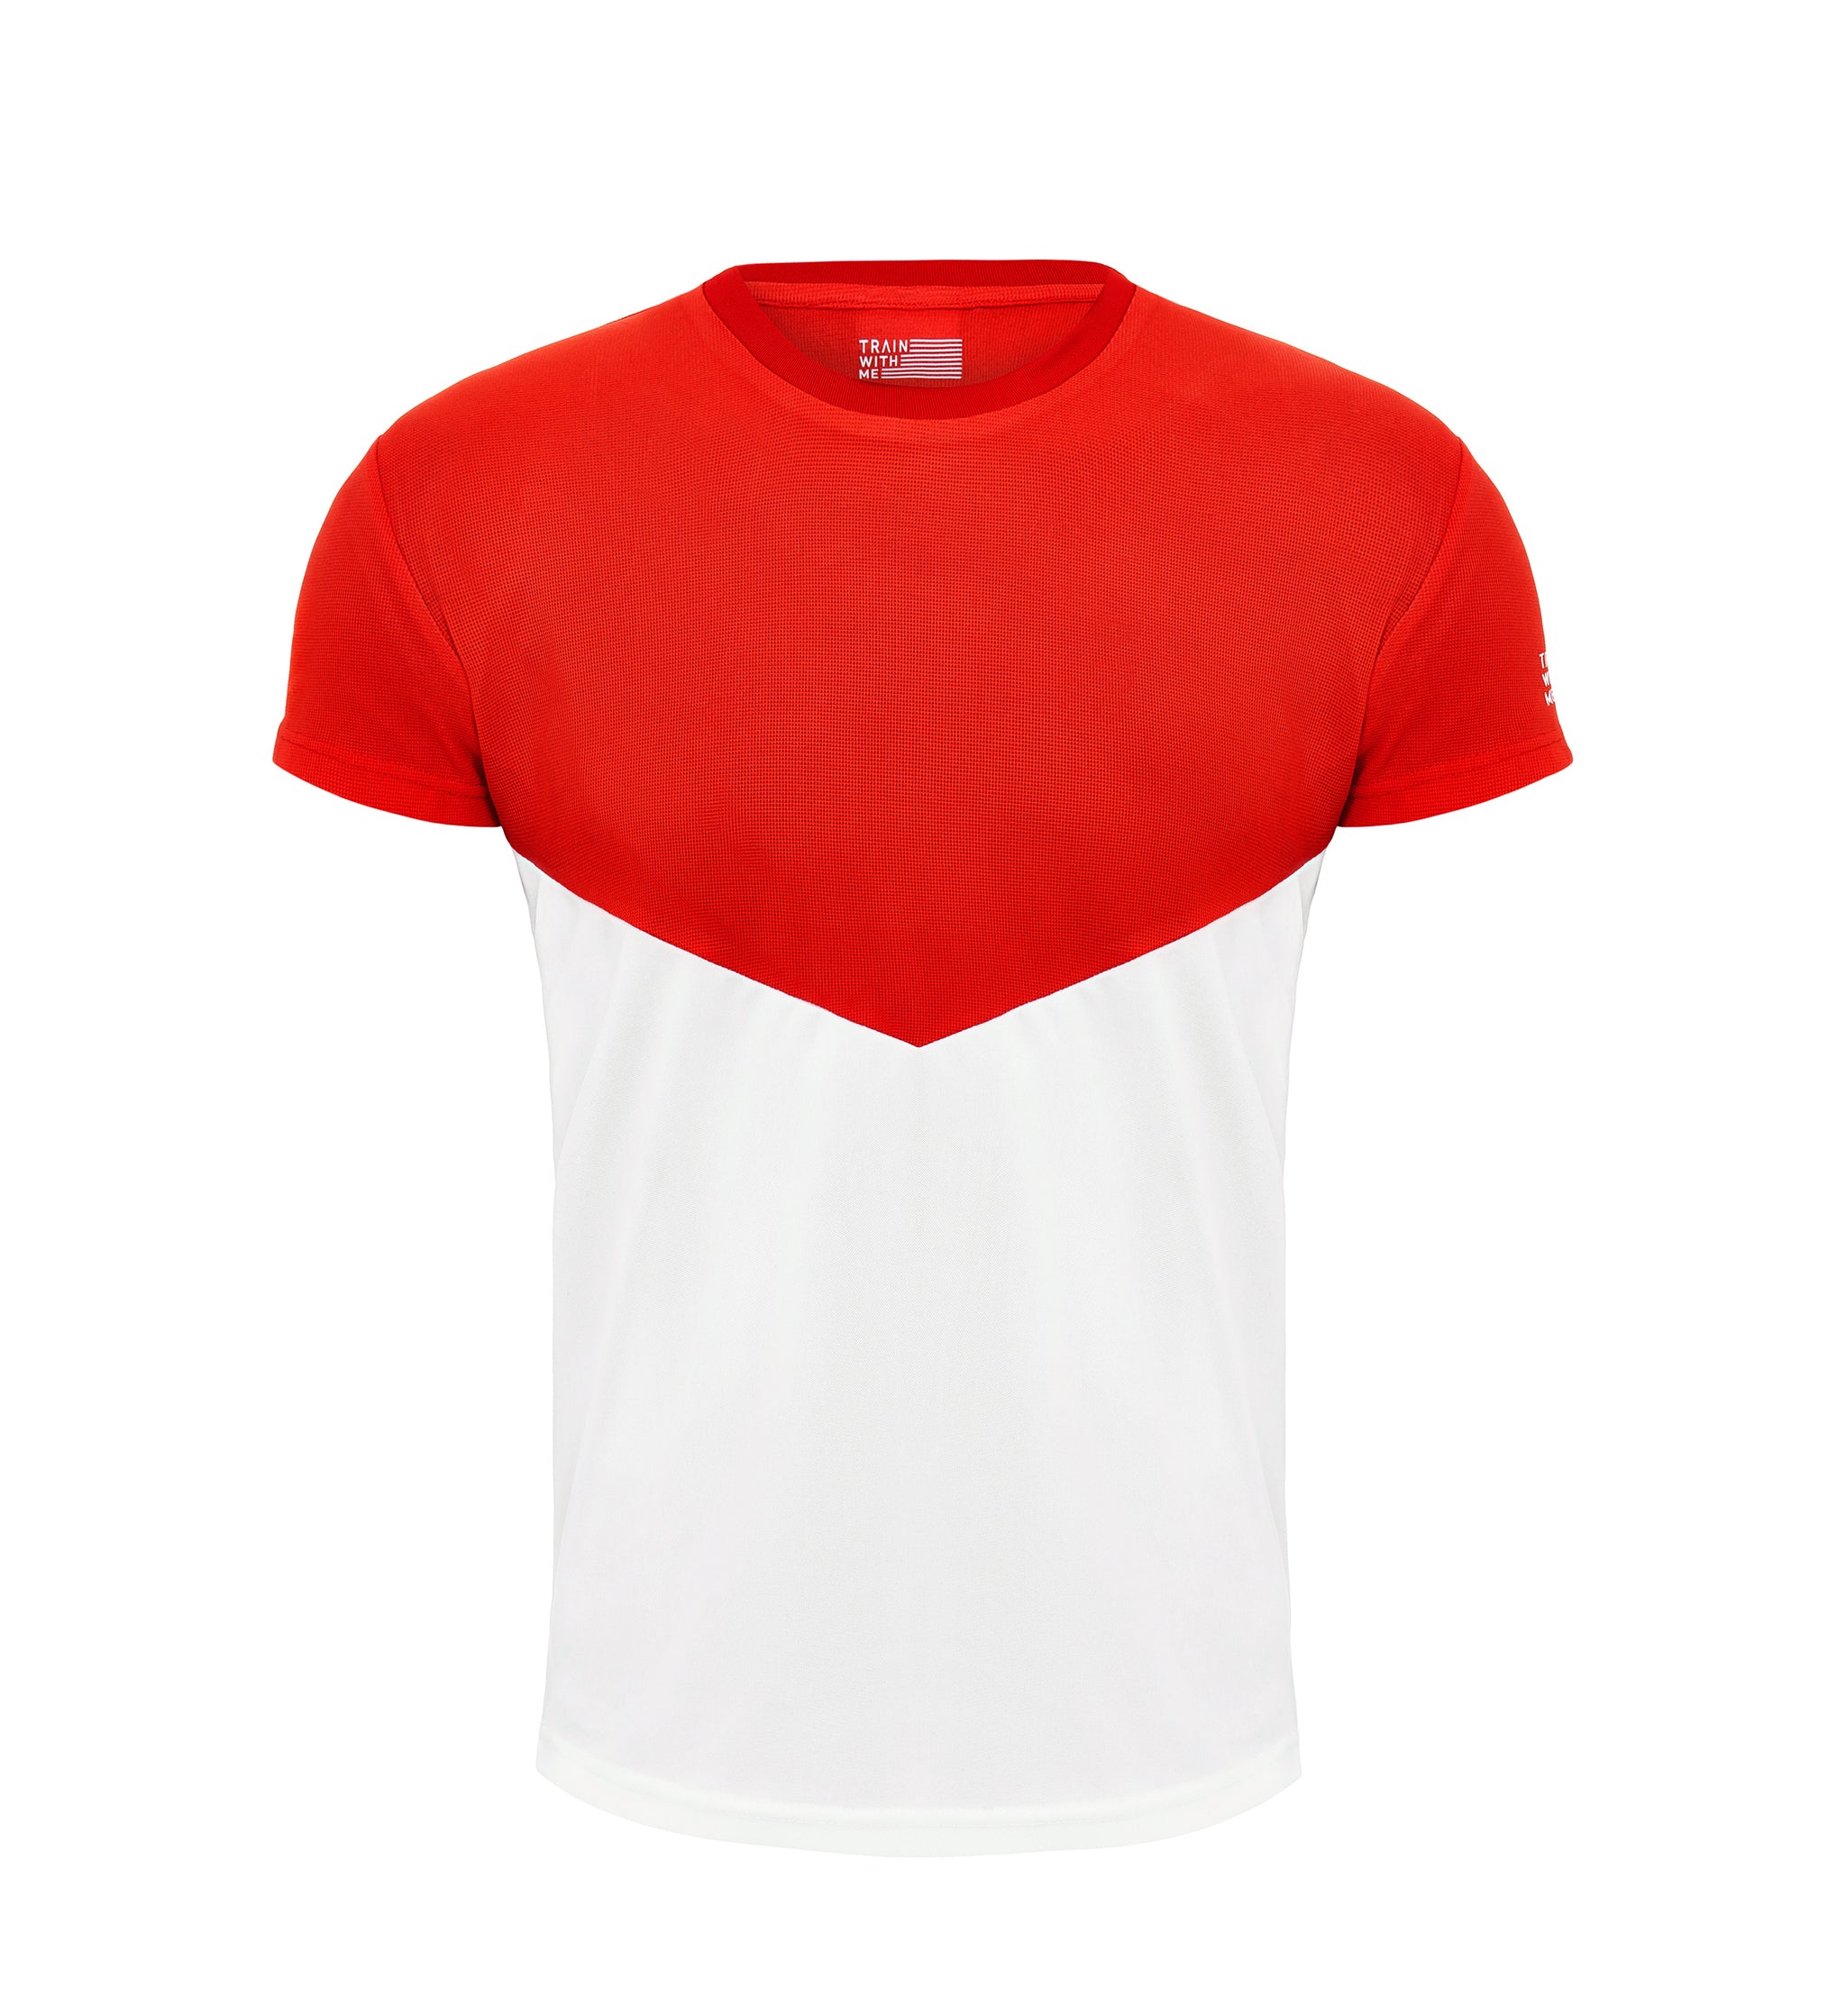 red white t shirt